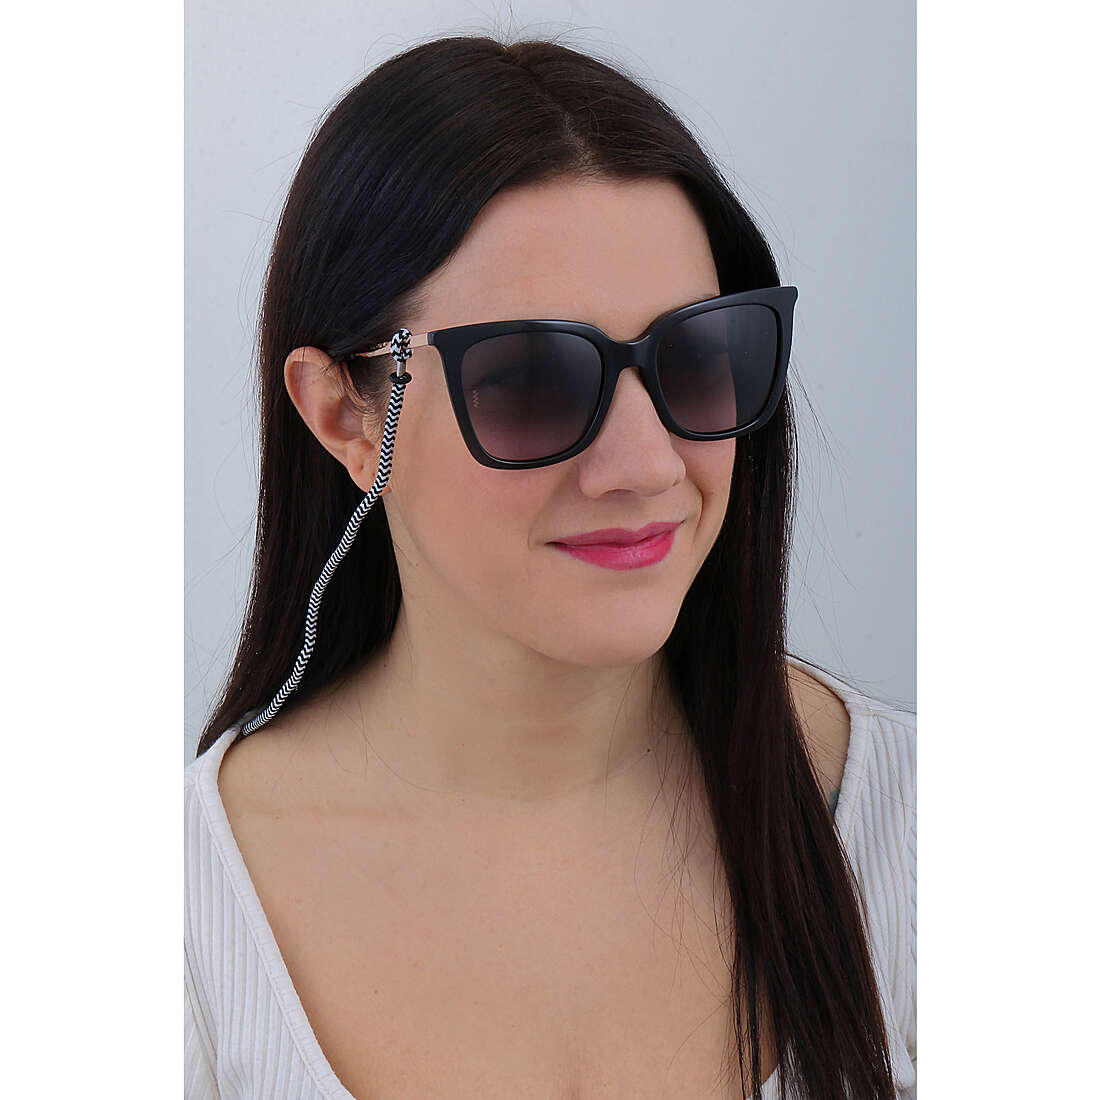 M Missoni sunglasses woman 205168807539O wearing